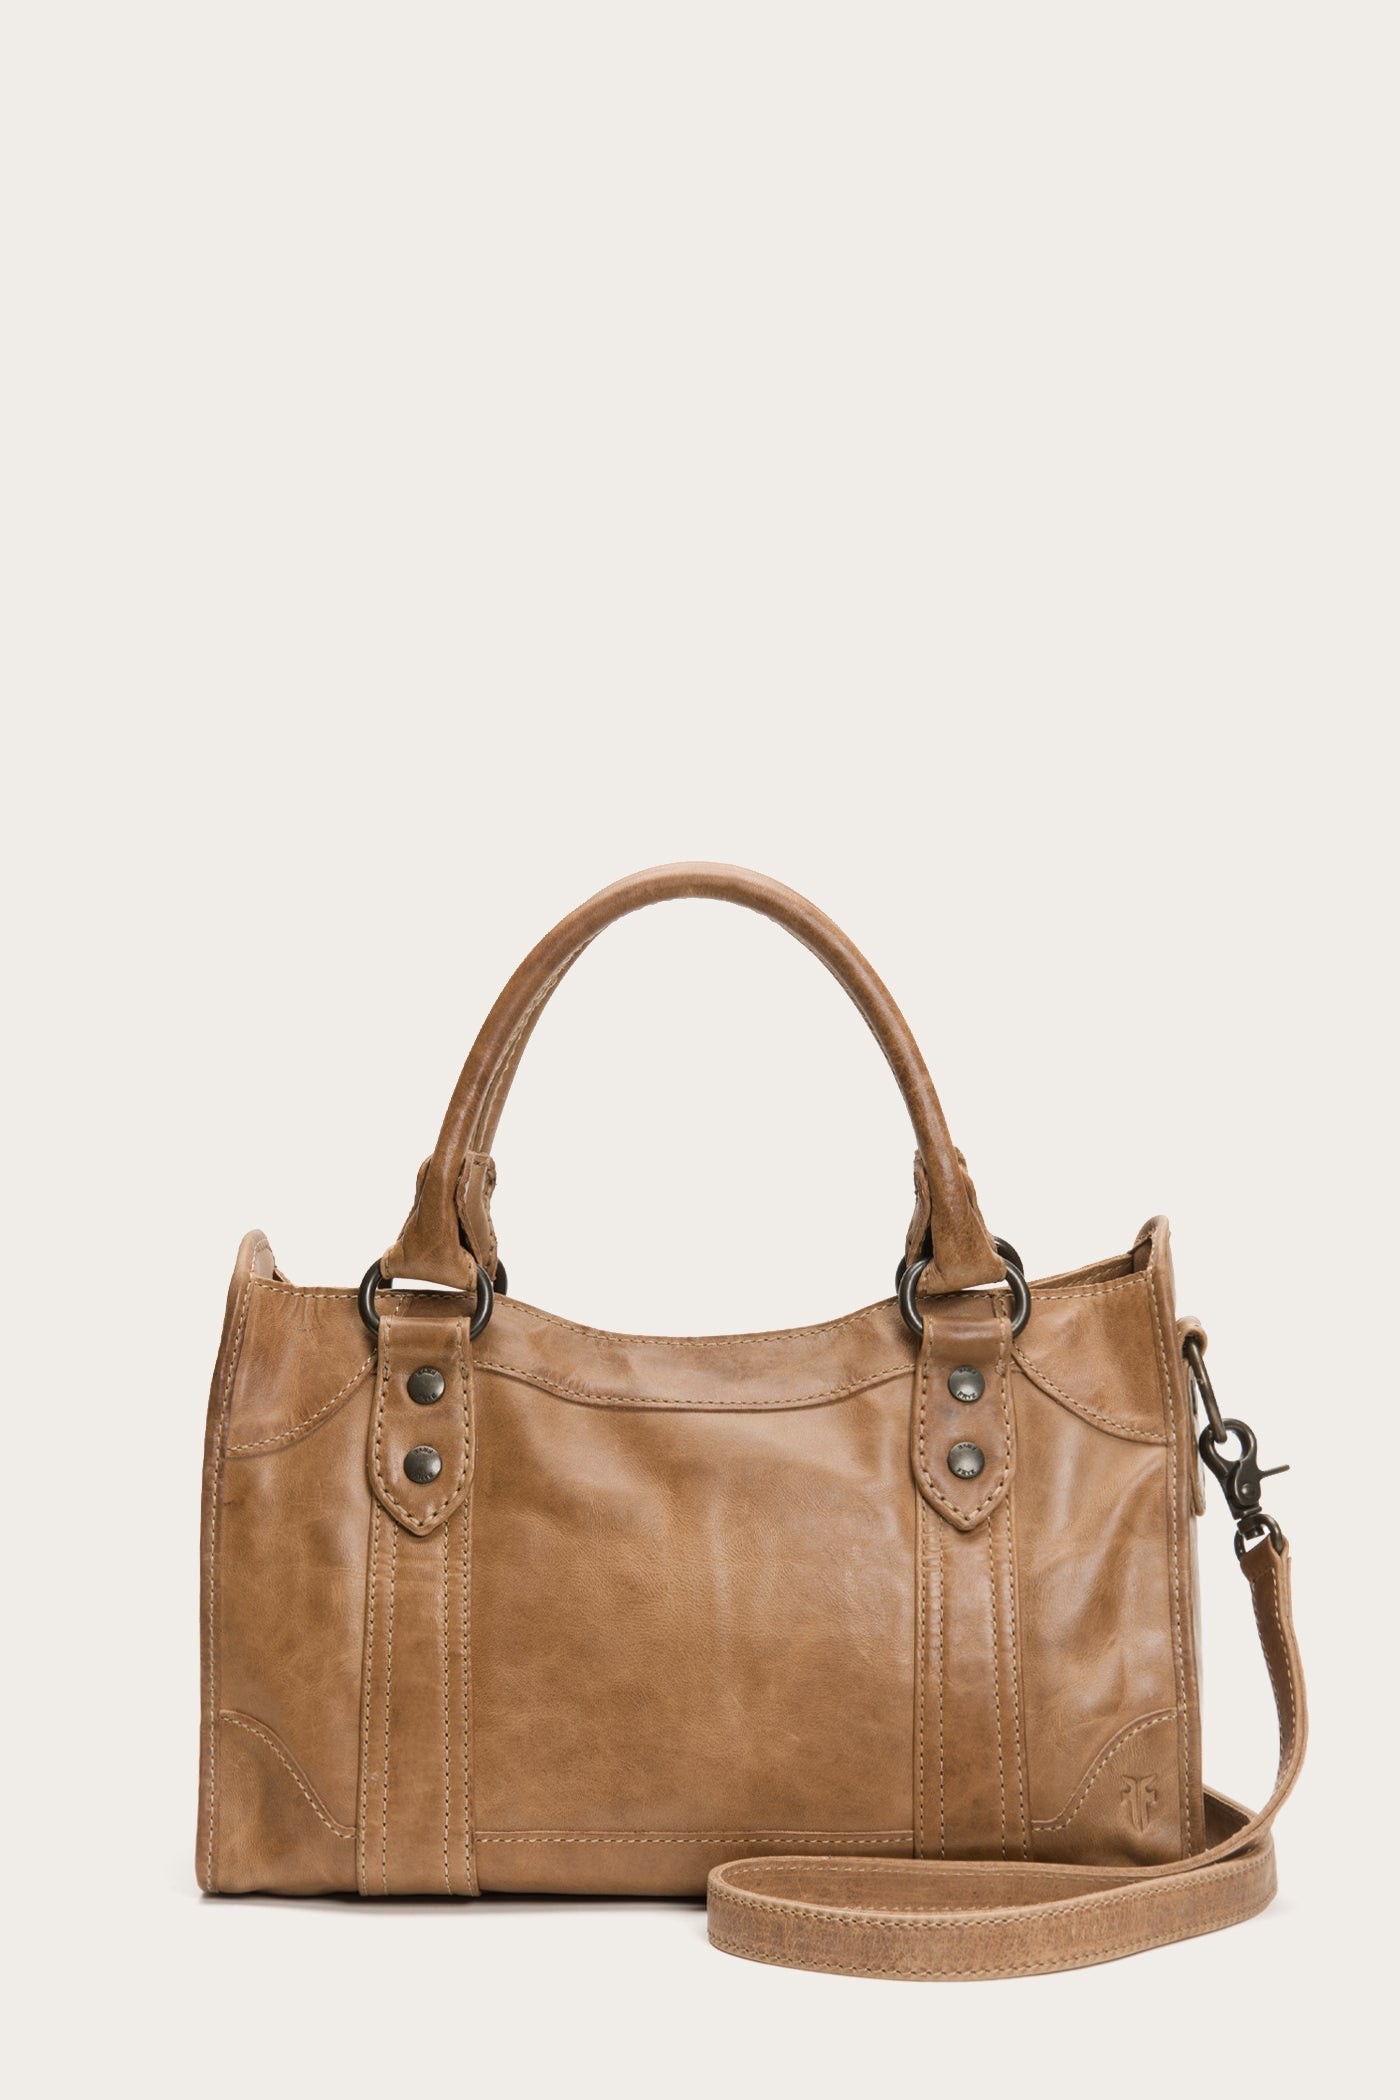 Melissa Red Saffiano Leather Satchel Bag